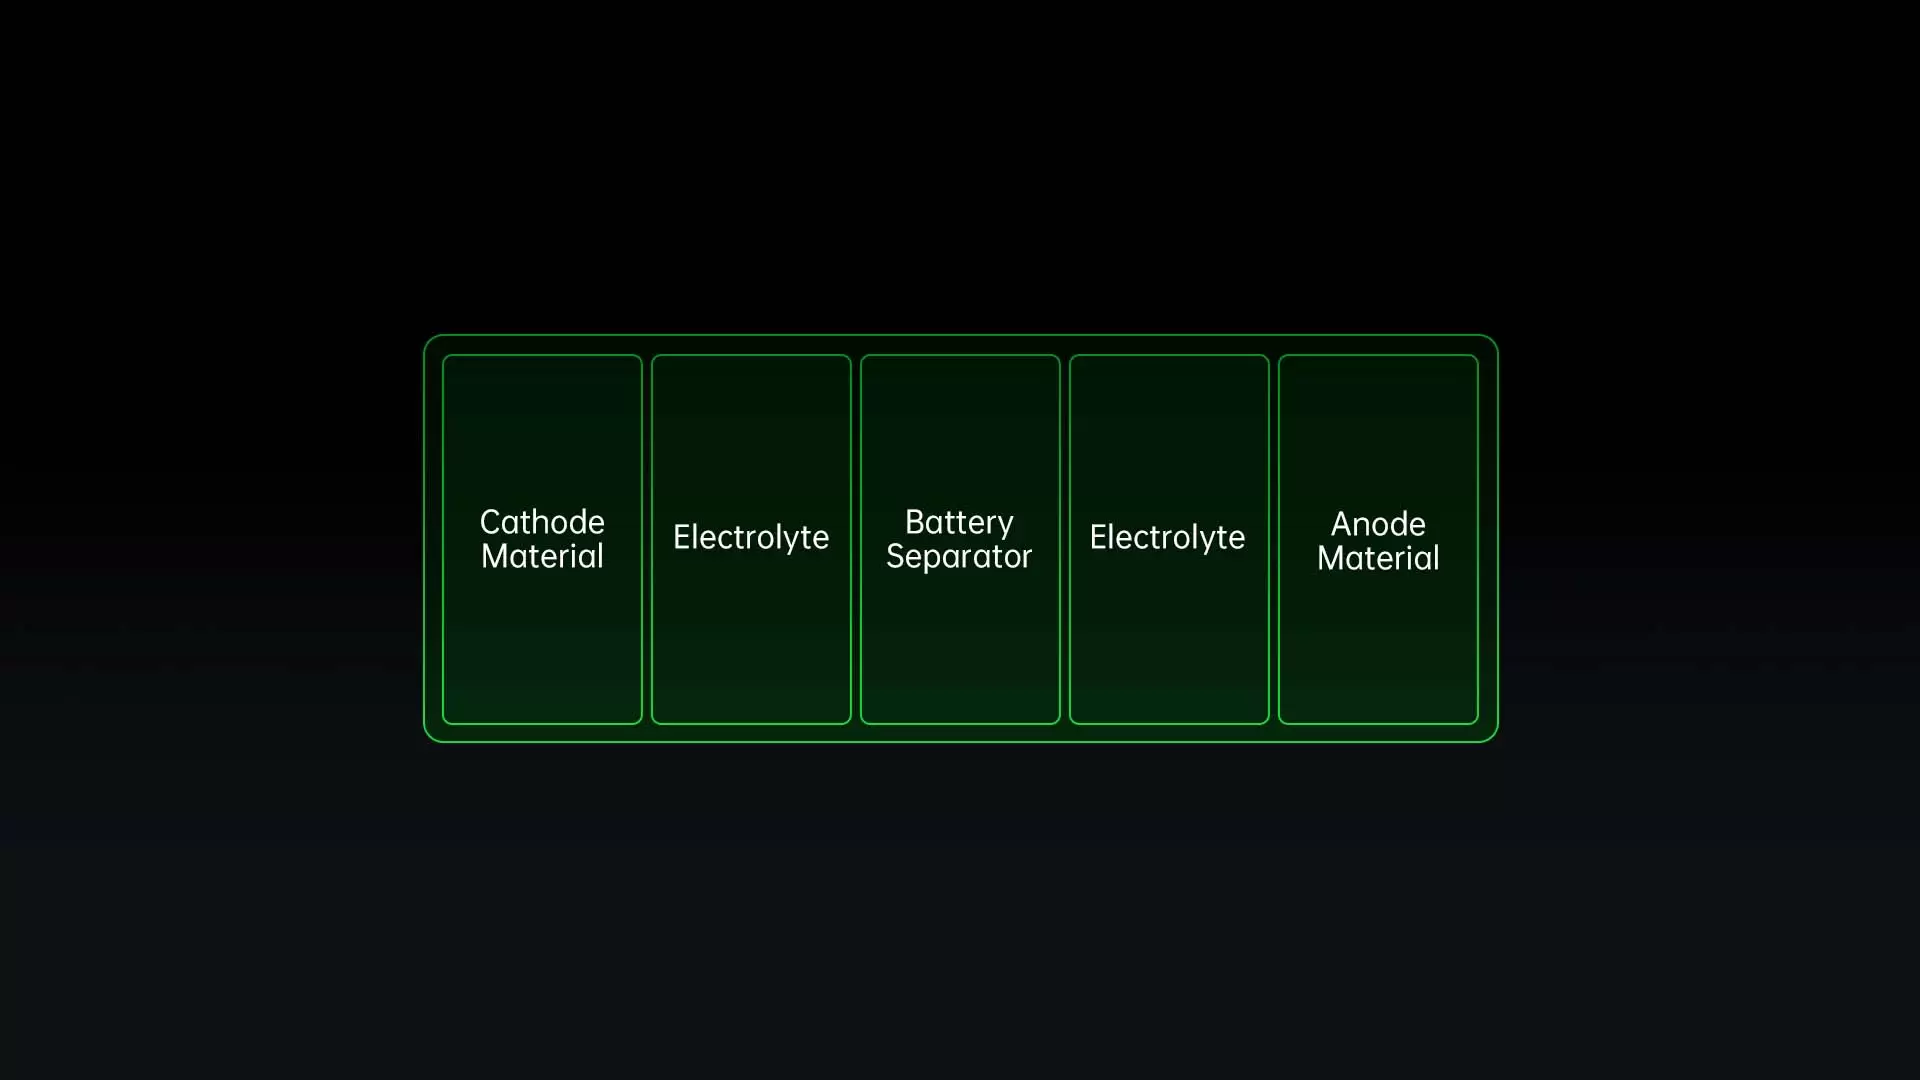 Battery Health Engine